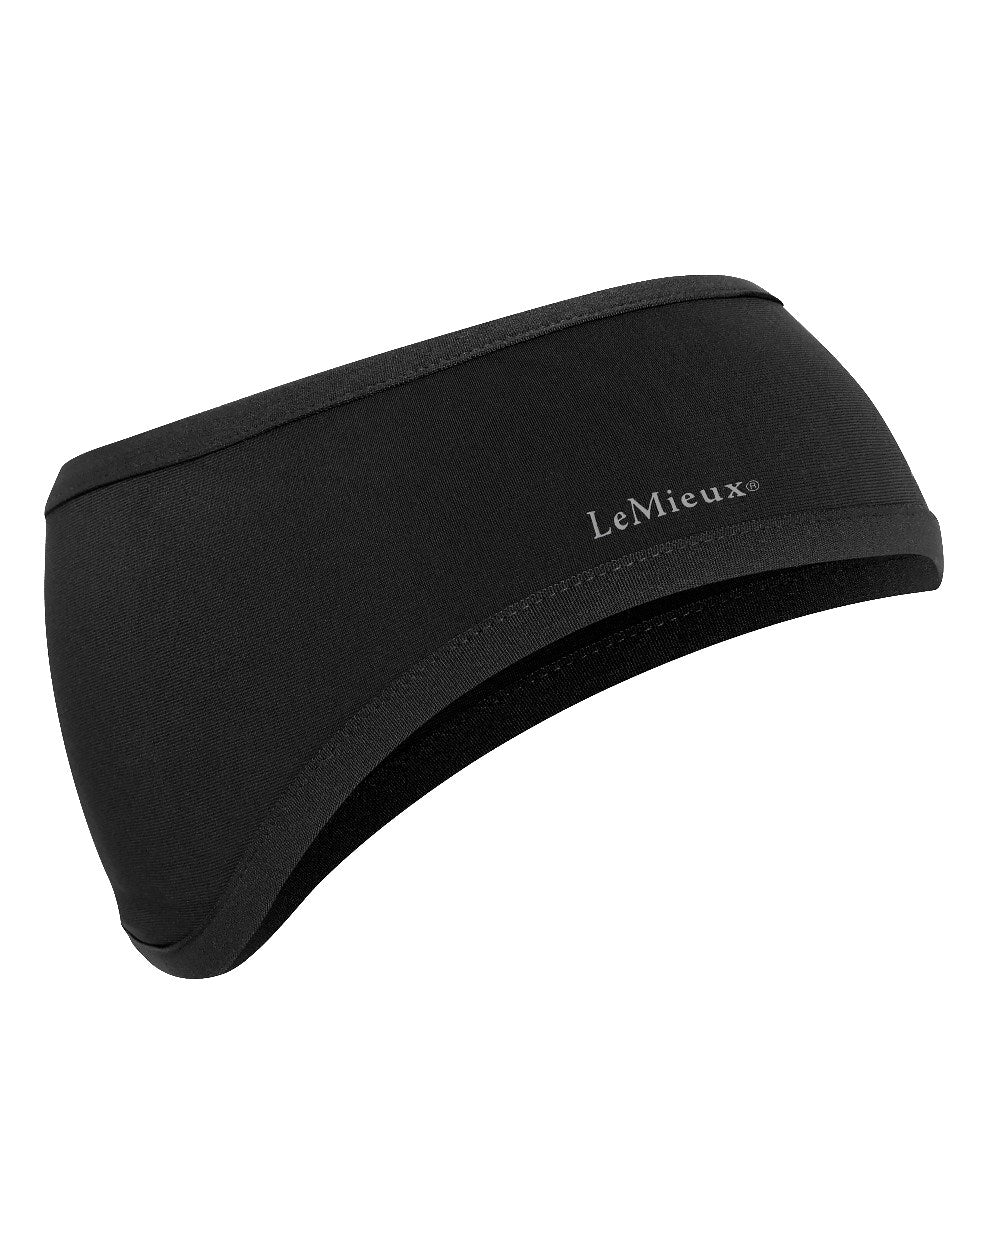 Black coloured LeMieux Ear Warmer Headband on white background 